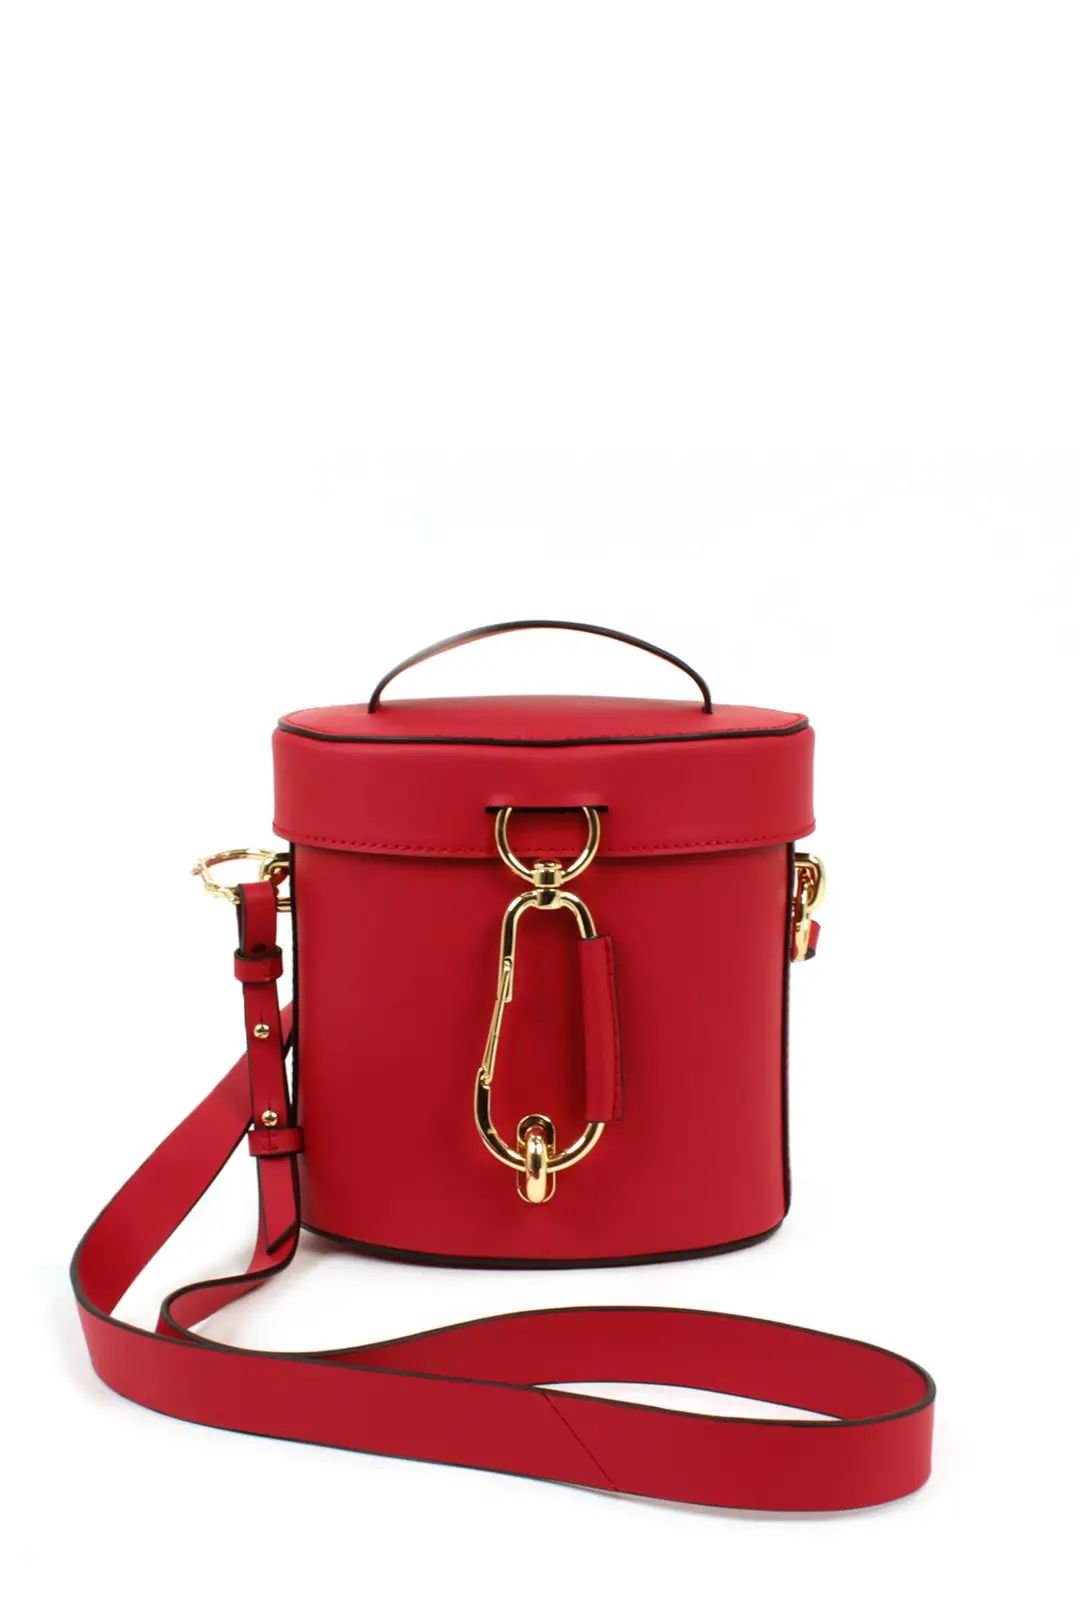 ZAC Zac Posen Handbags Red Belay Canteen Bag | Rent The Runway